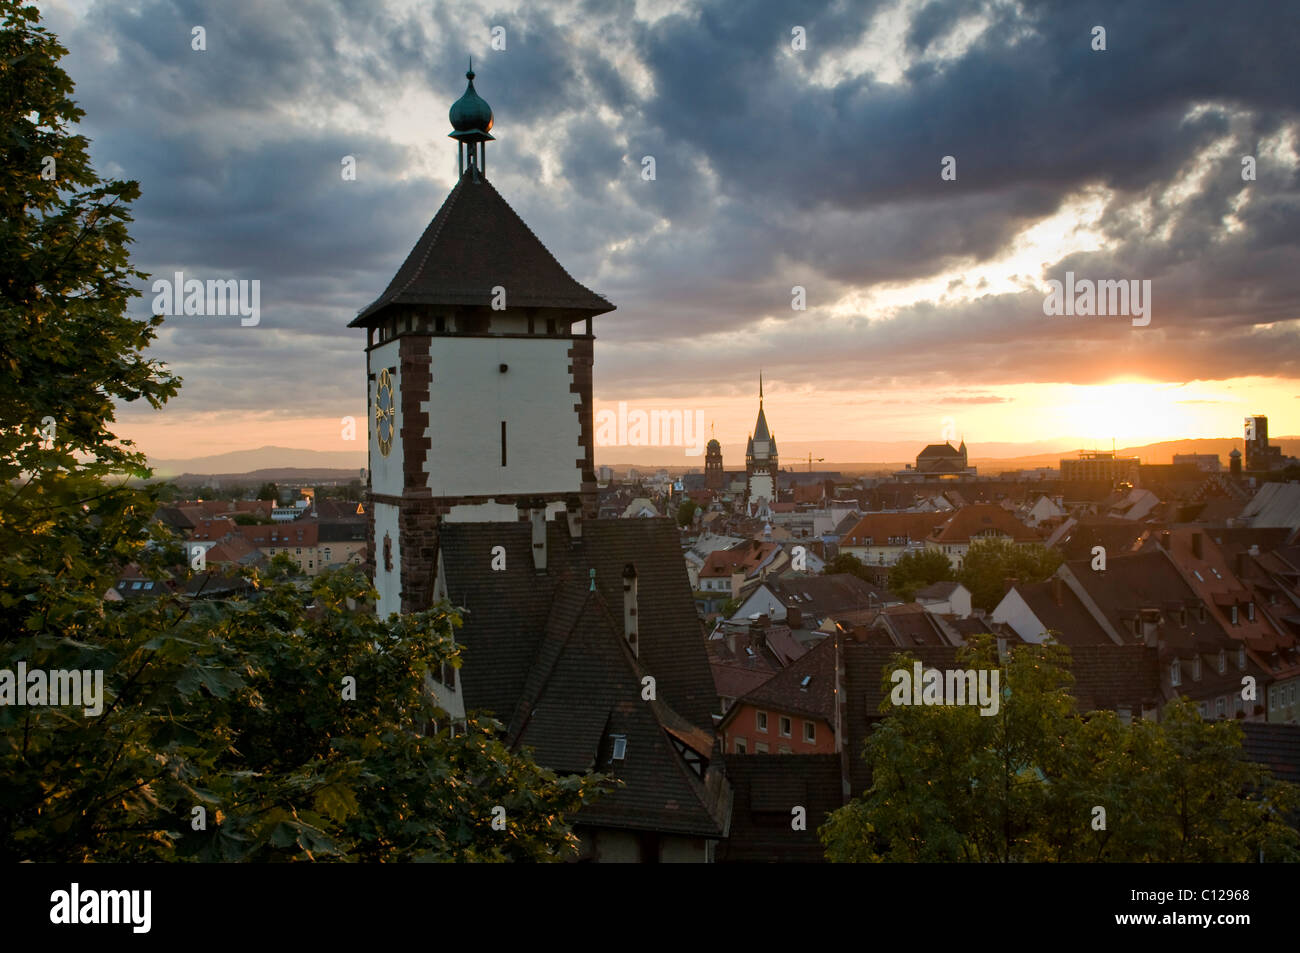 Schwabentor gate tower and evening mood, Freiburg im Breisgau, Baden-Wuerttemberg, Germany, Europe Stock Photo